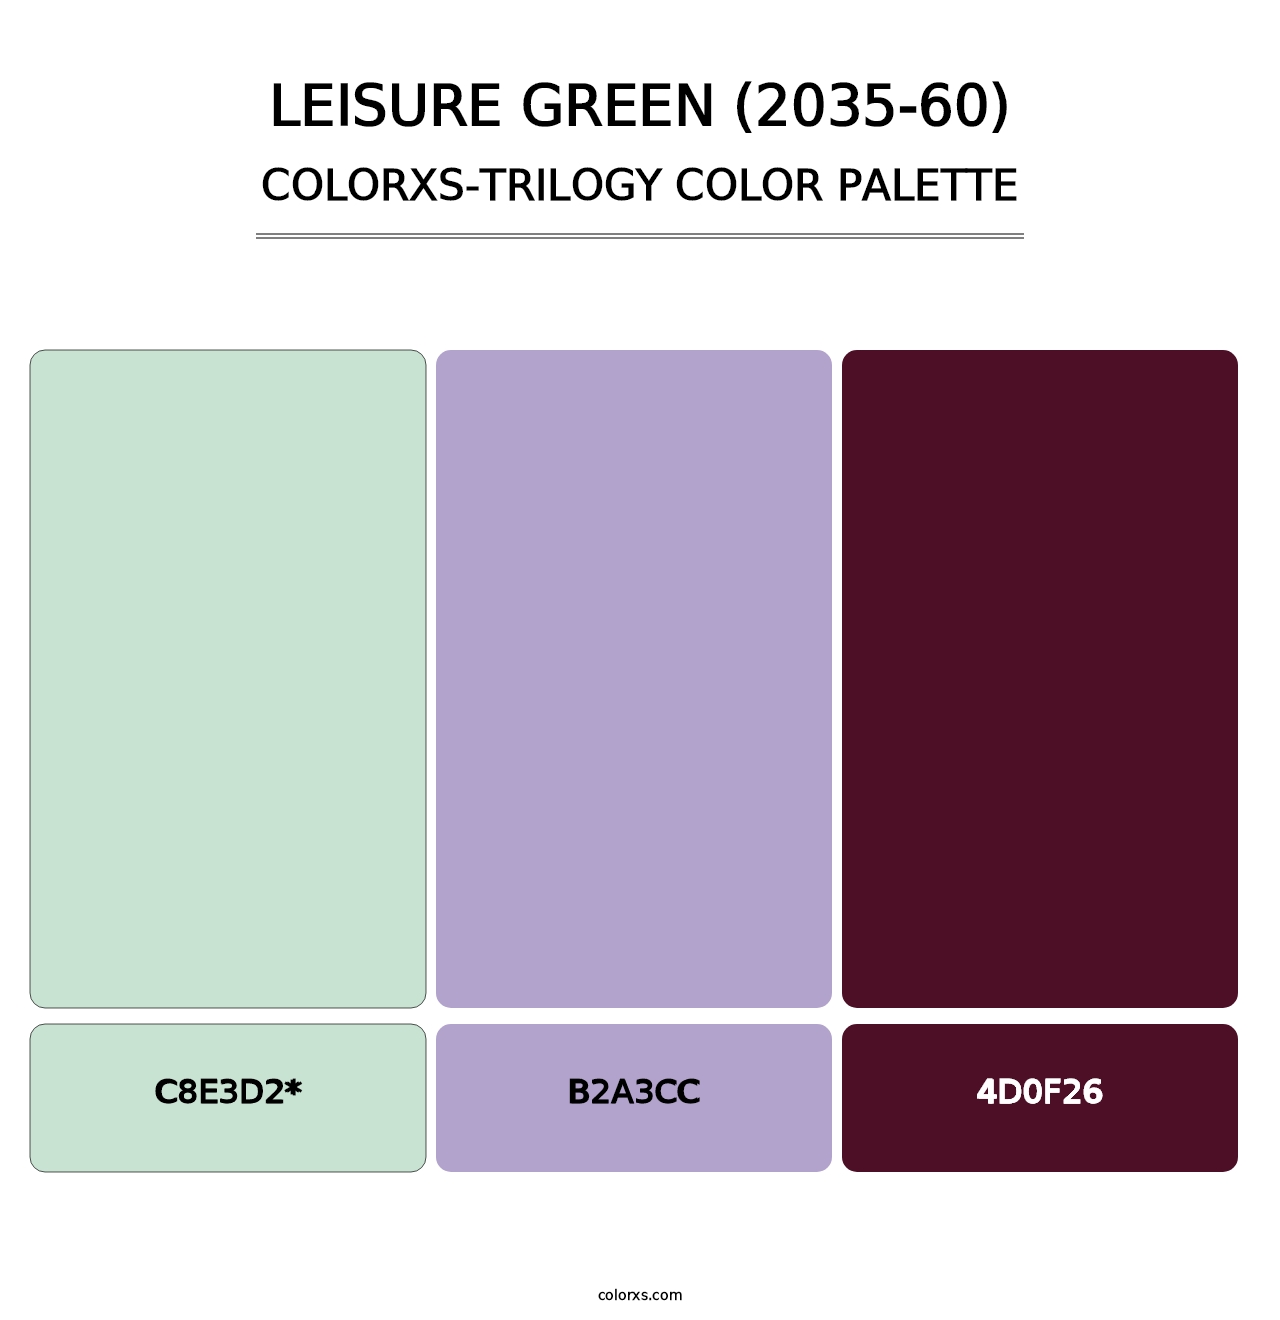 Leisure Green (2035-60) - Colorxs Trilogy Palette